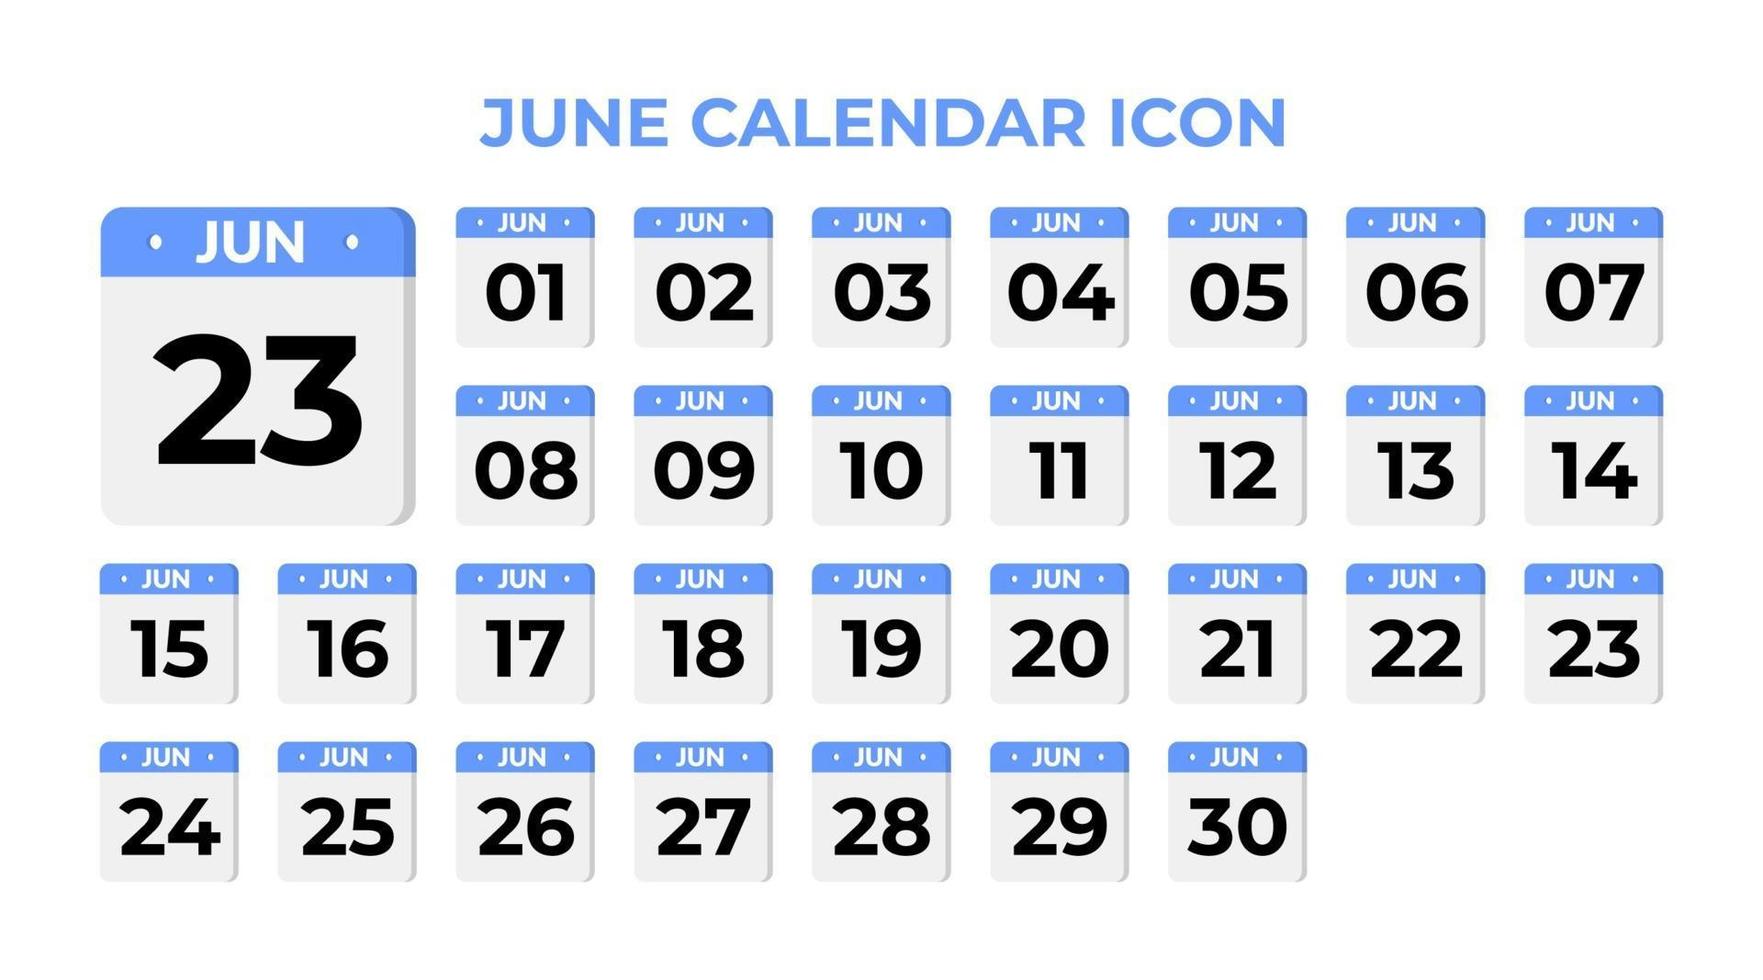 June calendar icon, set on blue vector